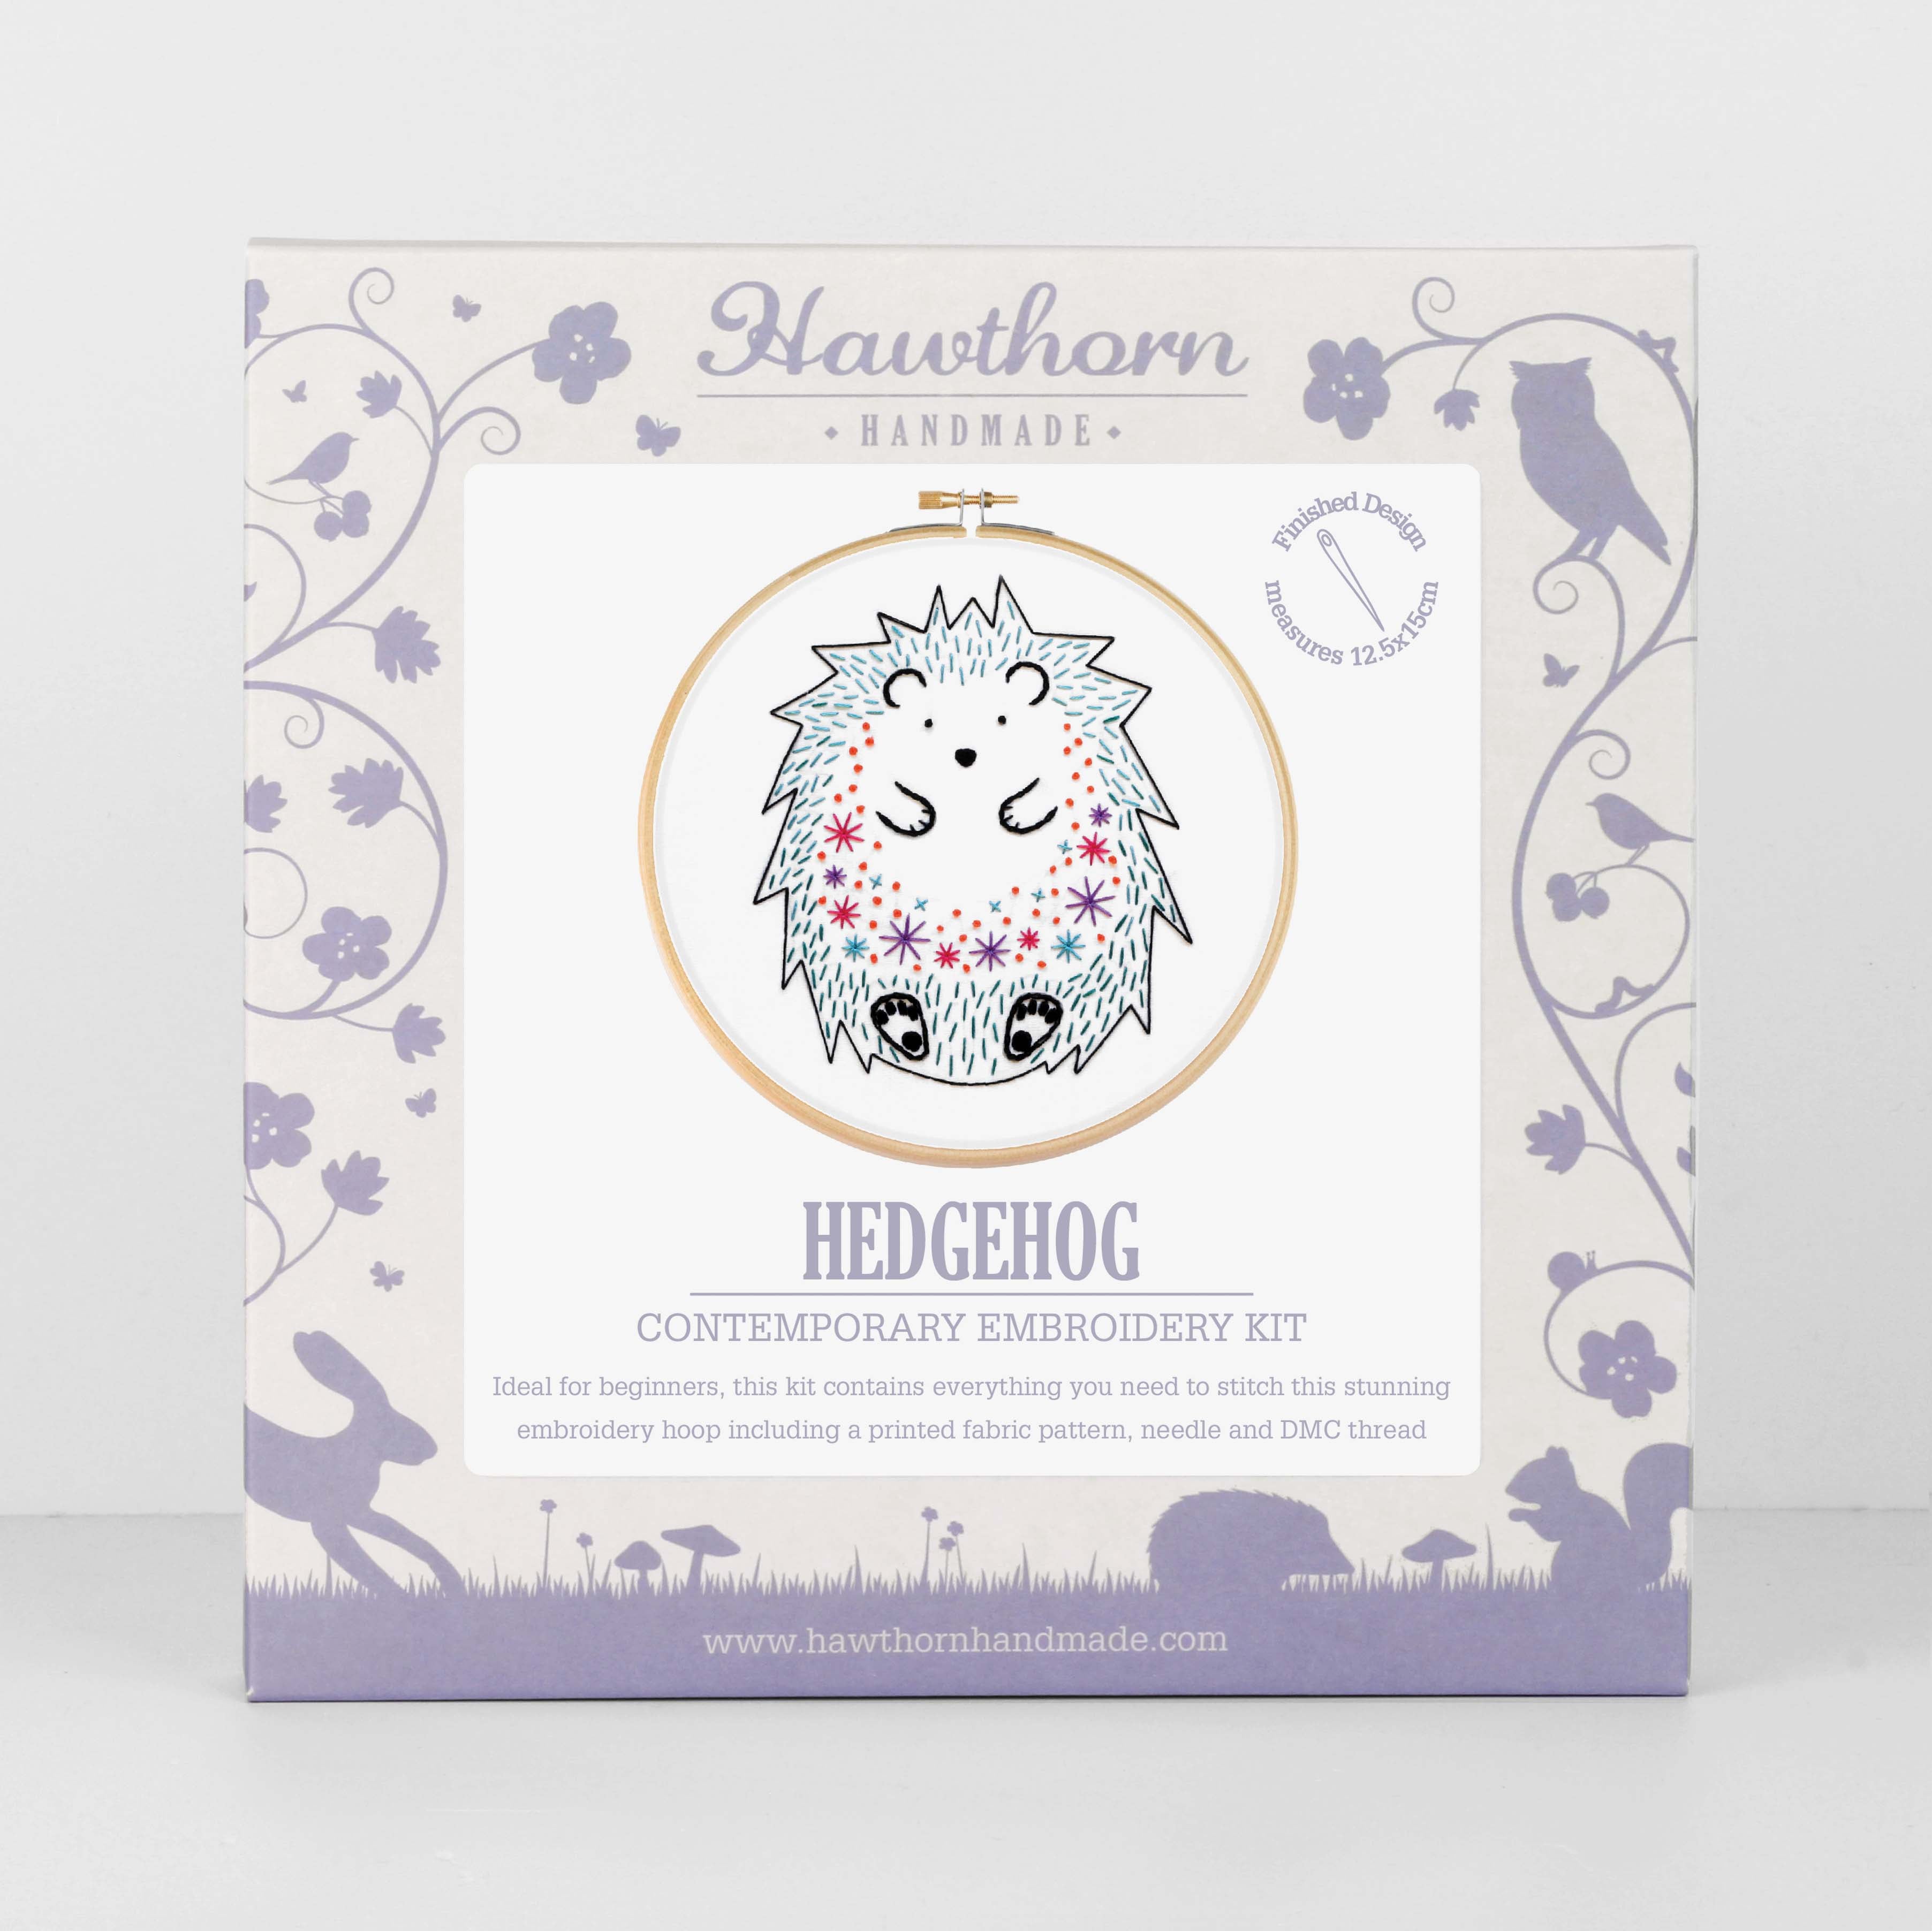 Hedgehog Embroidery Kit, Hawthorn Handmade